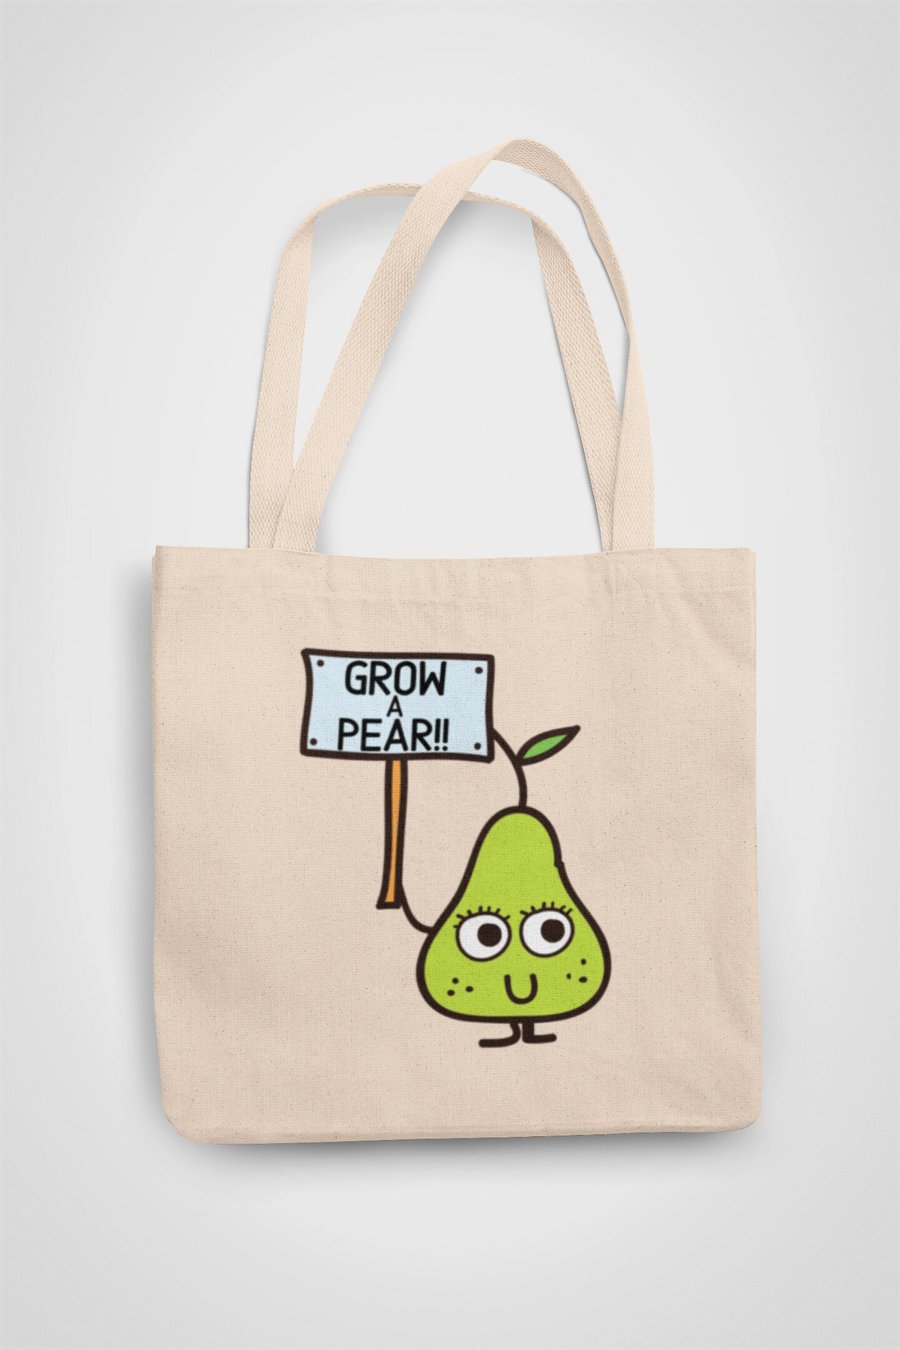 Grow a Pear Tote Bag Reusable Cotton bag - funny adult birthday present gift - 